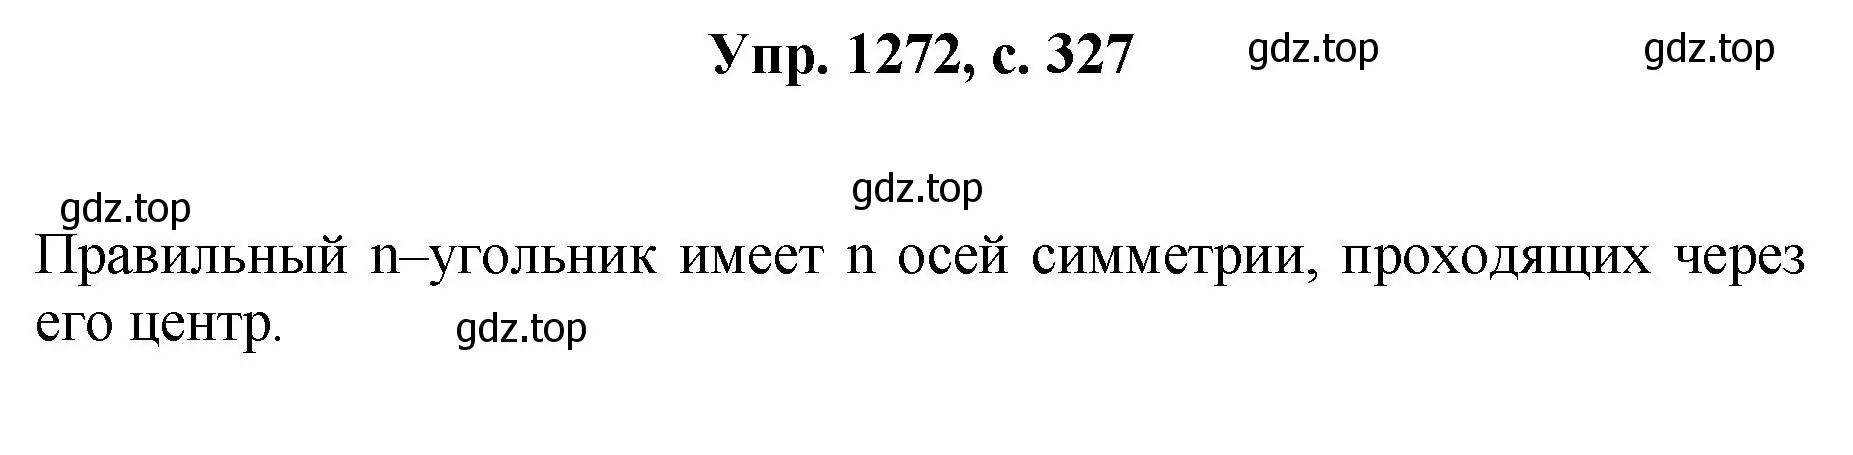 Решение номер 1272 (страница 327) гдз по геометрии 7-9 класс Атанасян, Бутузов, учебник